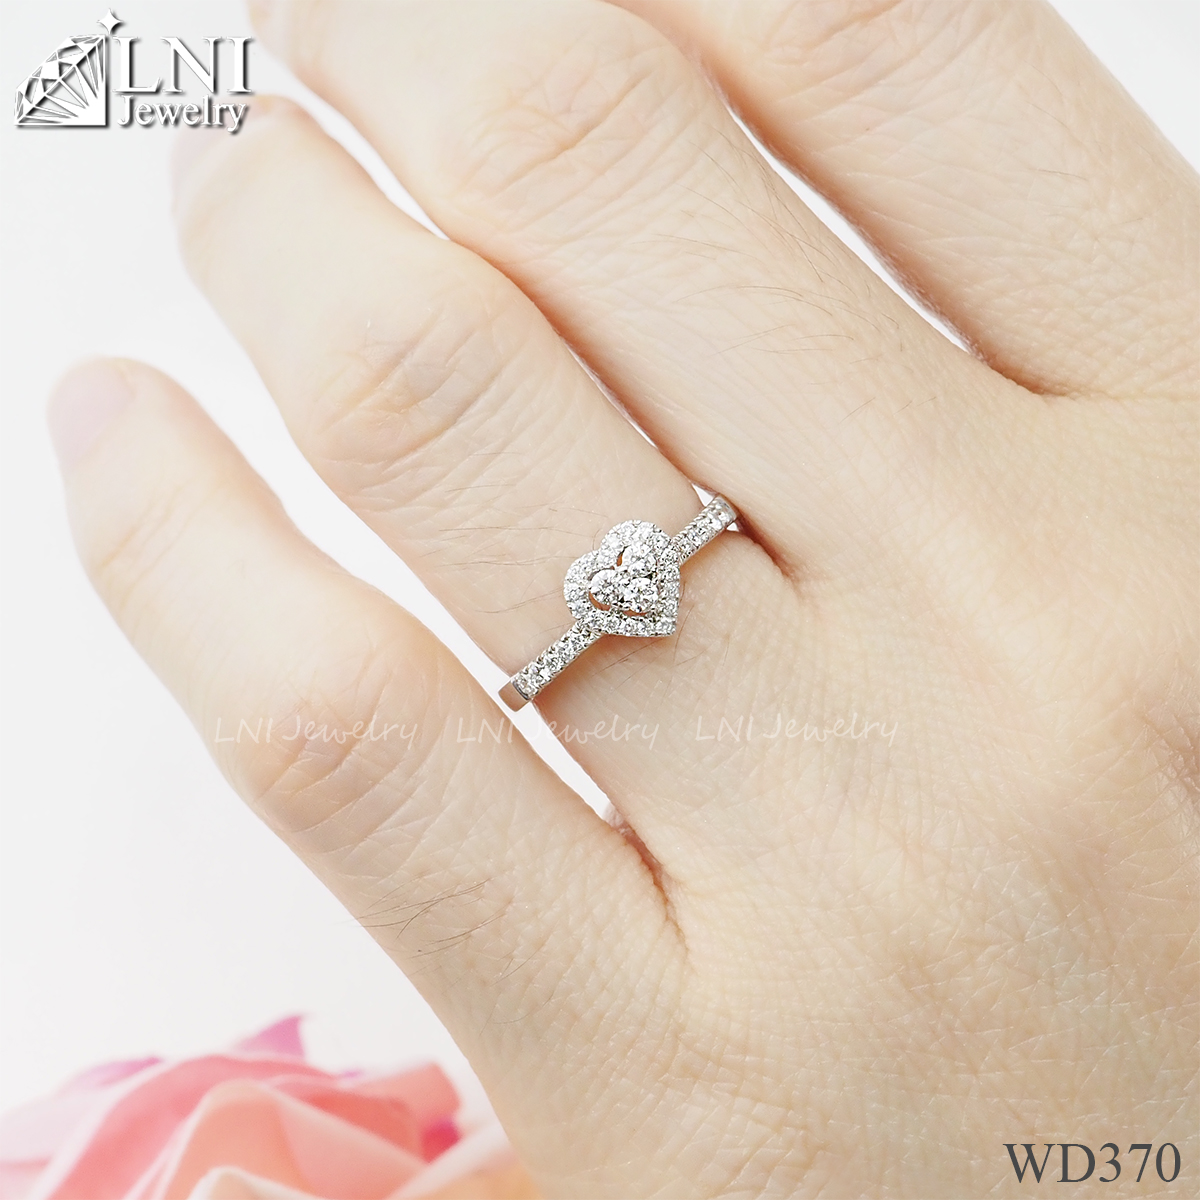 WD370 Halo Diamond Ring